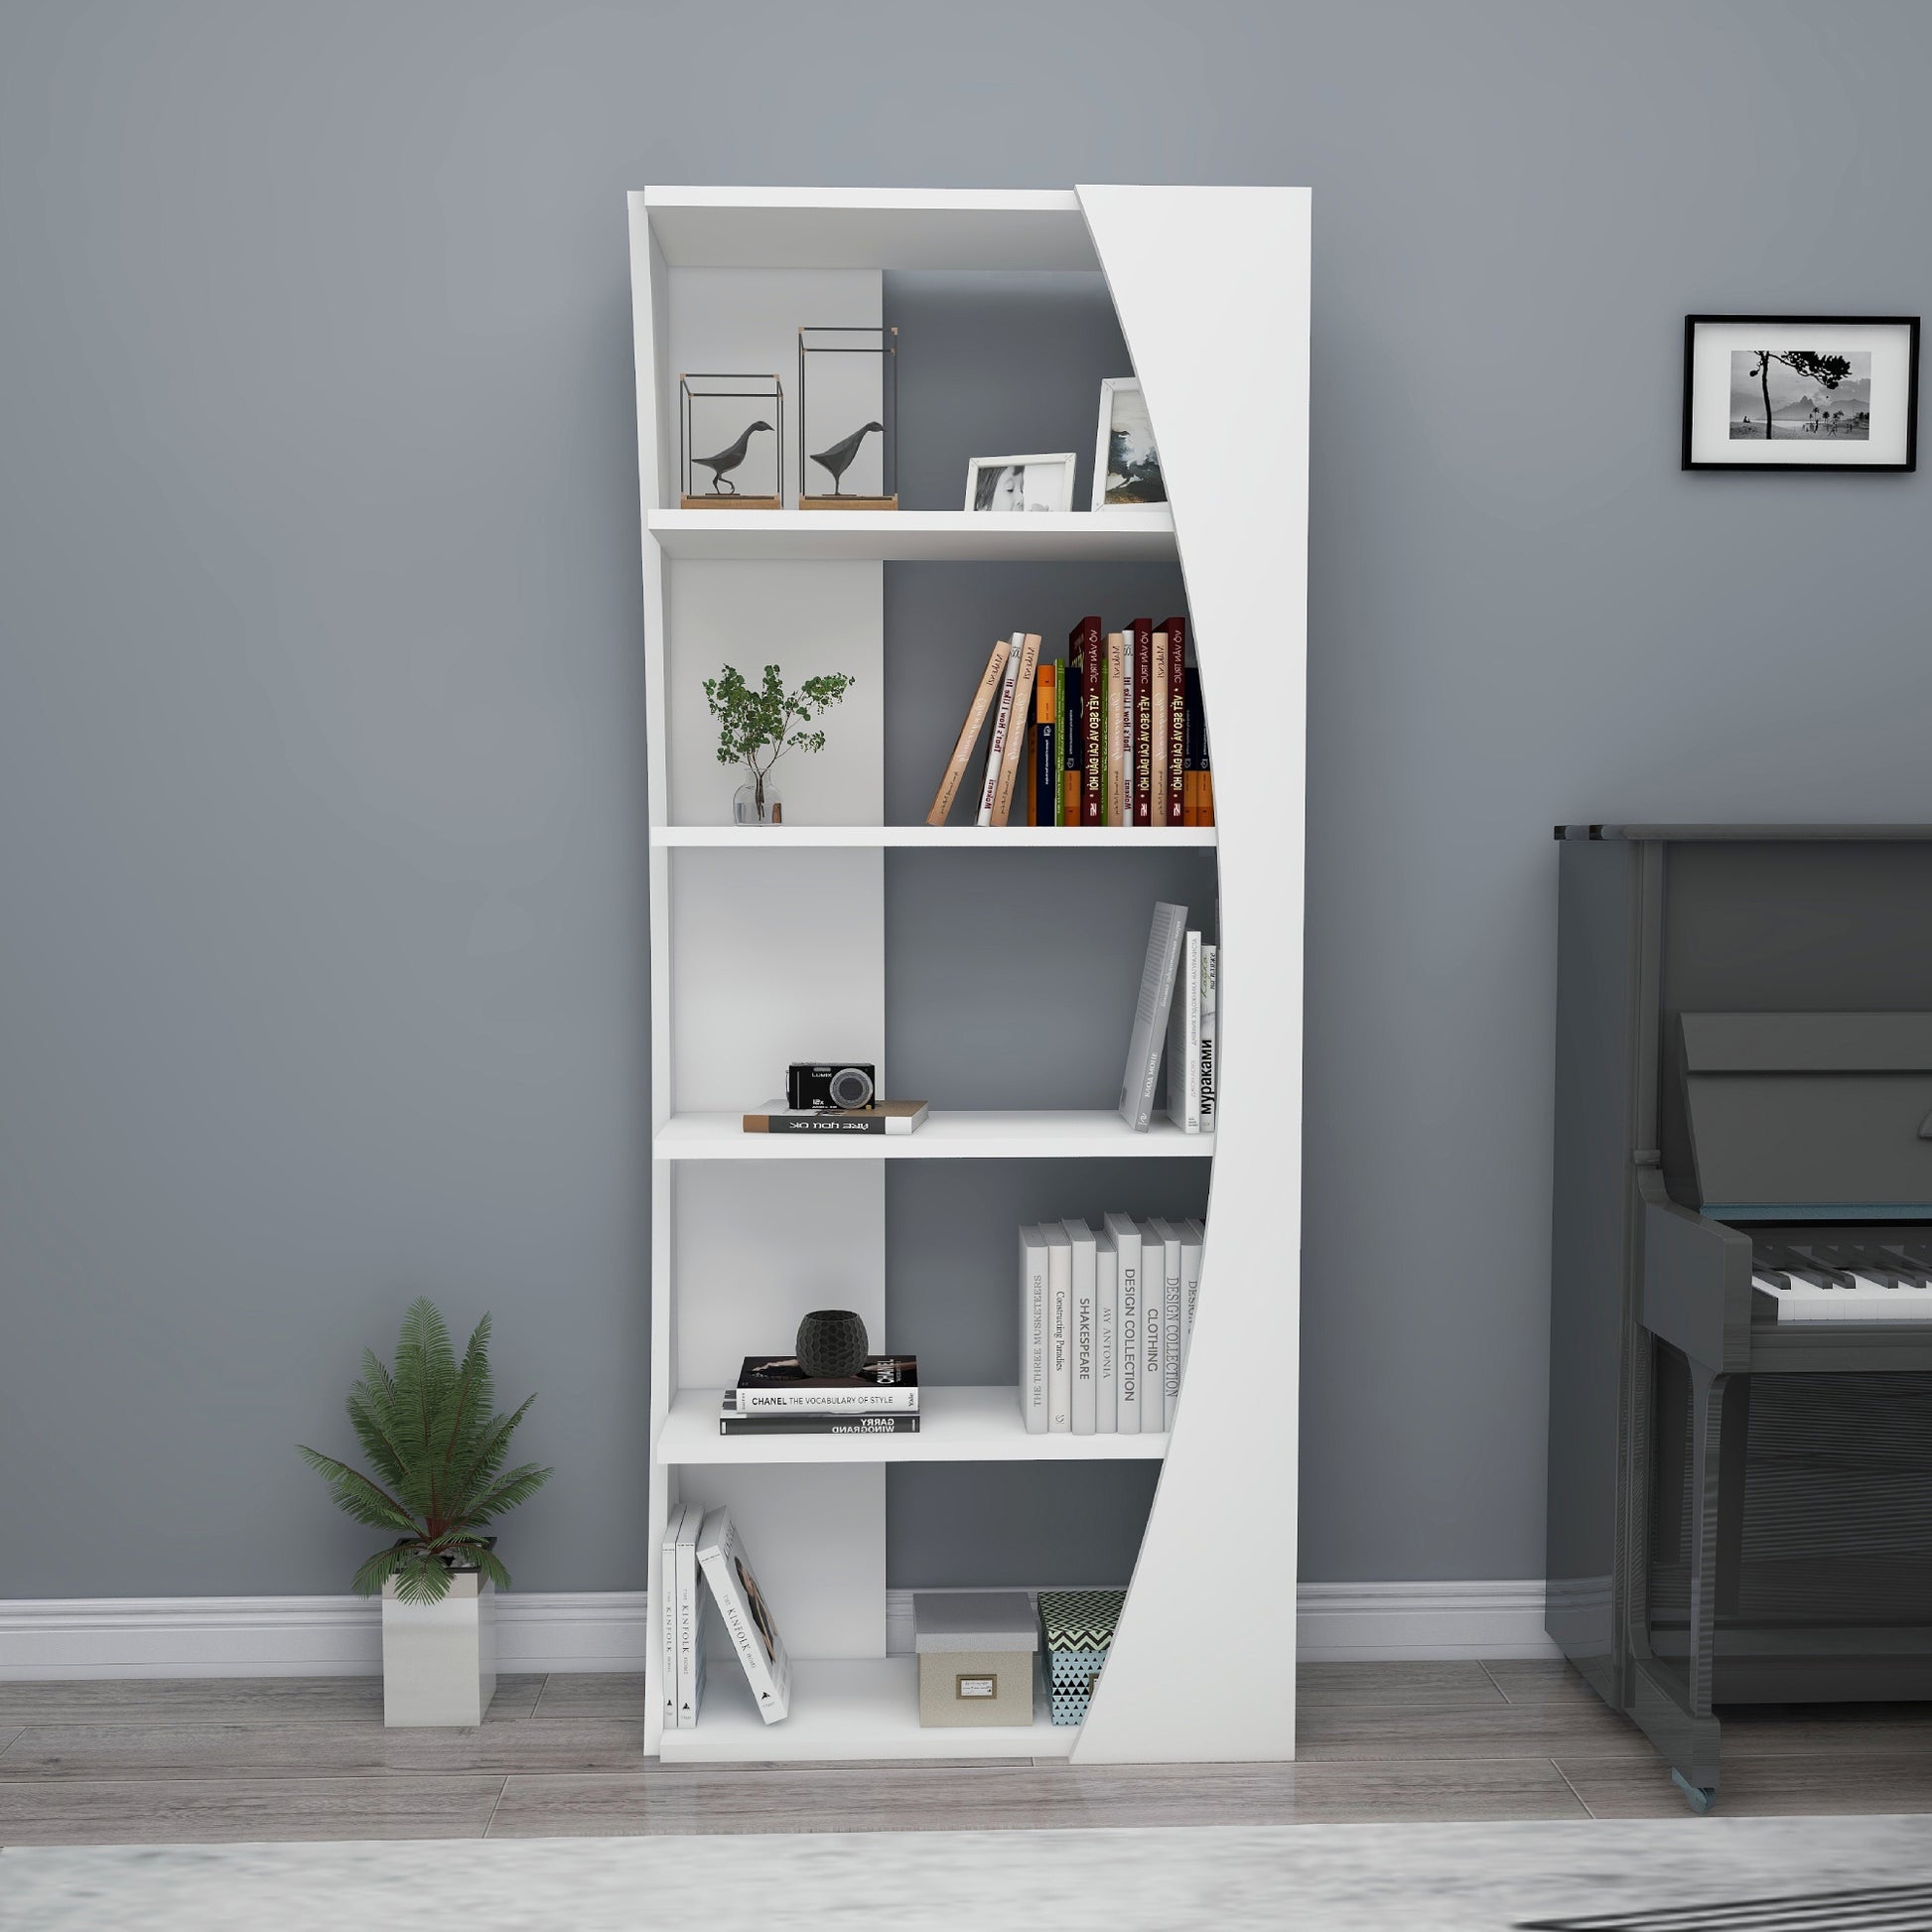 Bookcase, Bookshelf, Floating Bookcase, Floating Bookshelf, Shelving Unit, Shelf, Furniture, Home, Office, Living room, Study room 